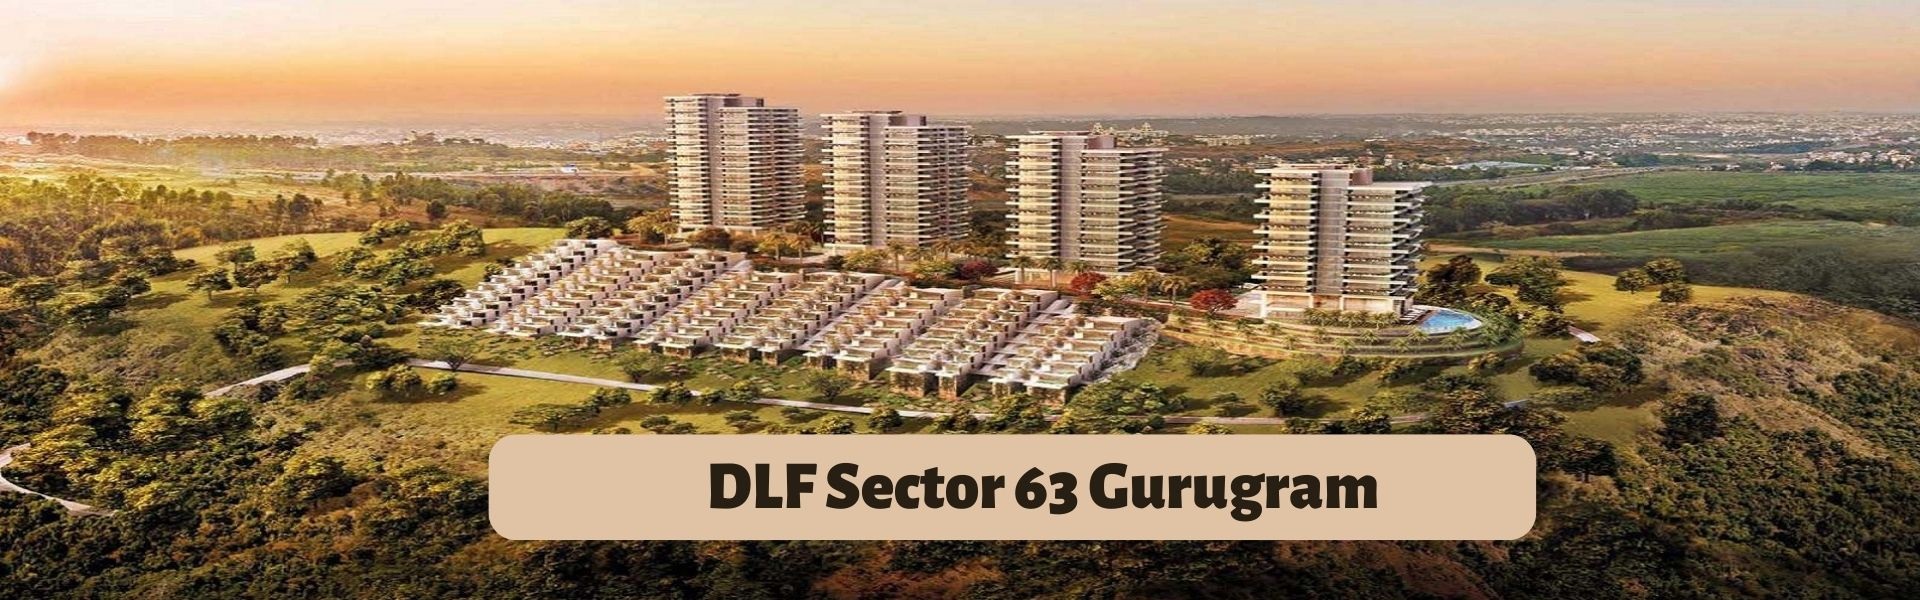 DLF Sector 63 Gurugram | Premium Residential Project in Gurgaon